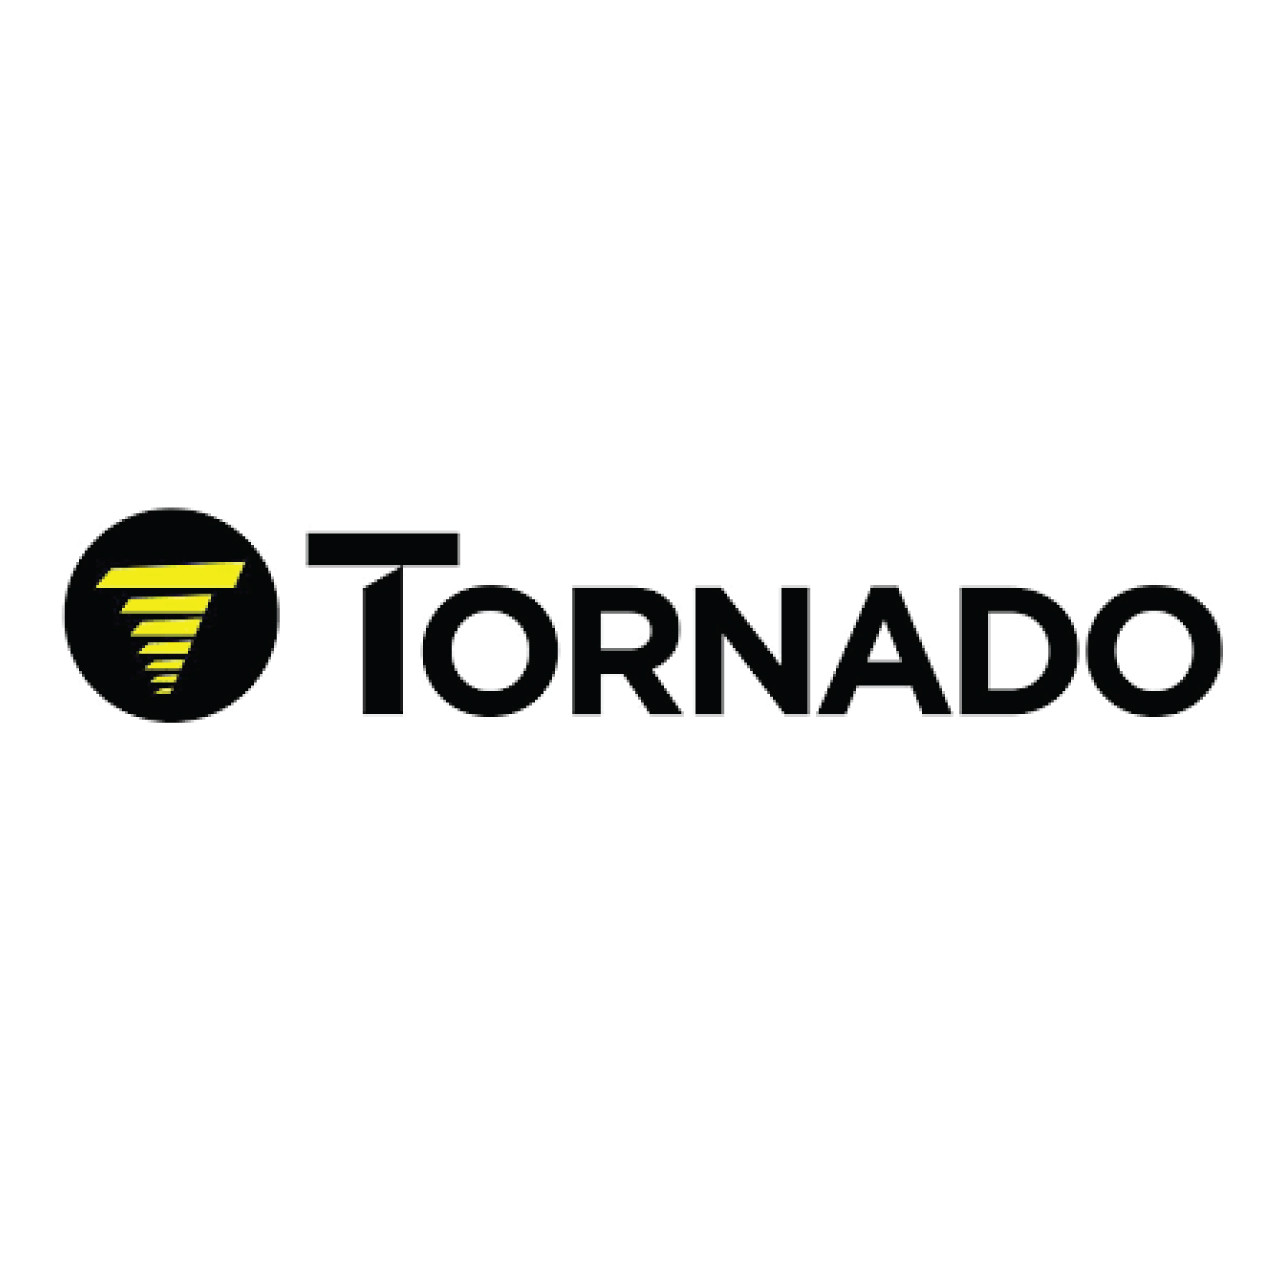 02-4411-0000, Tornado 02-4411-0000, Tornado ENCLOSURE FOR MOTOR STARTER K/M P/N REF CI-PKZ-O-G, Tornado parts